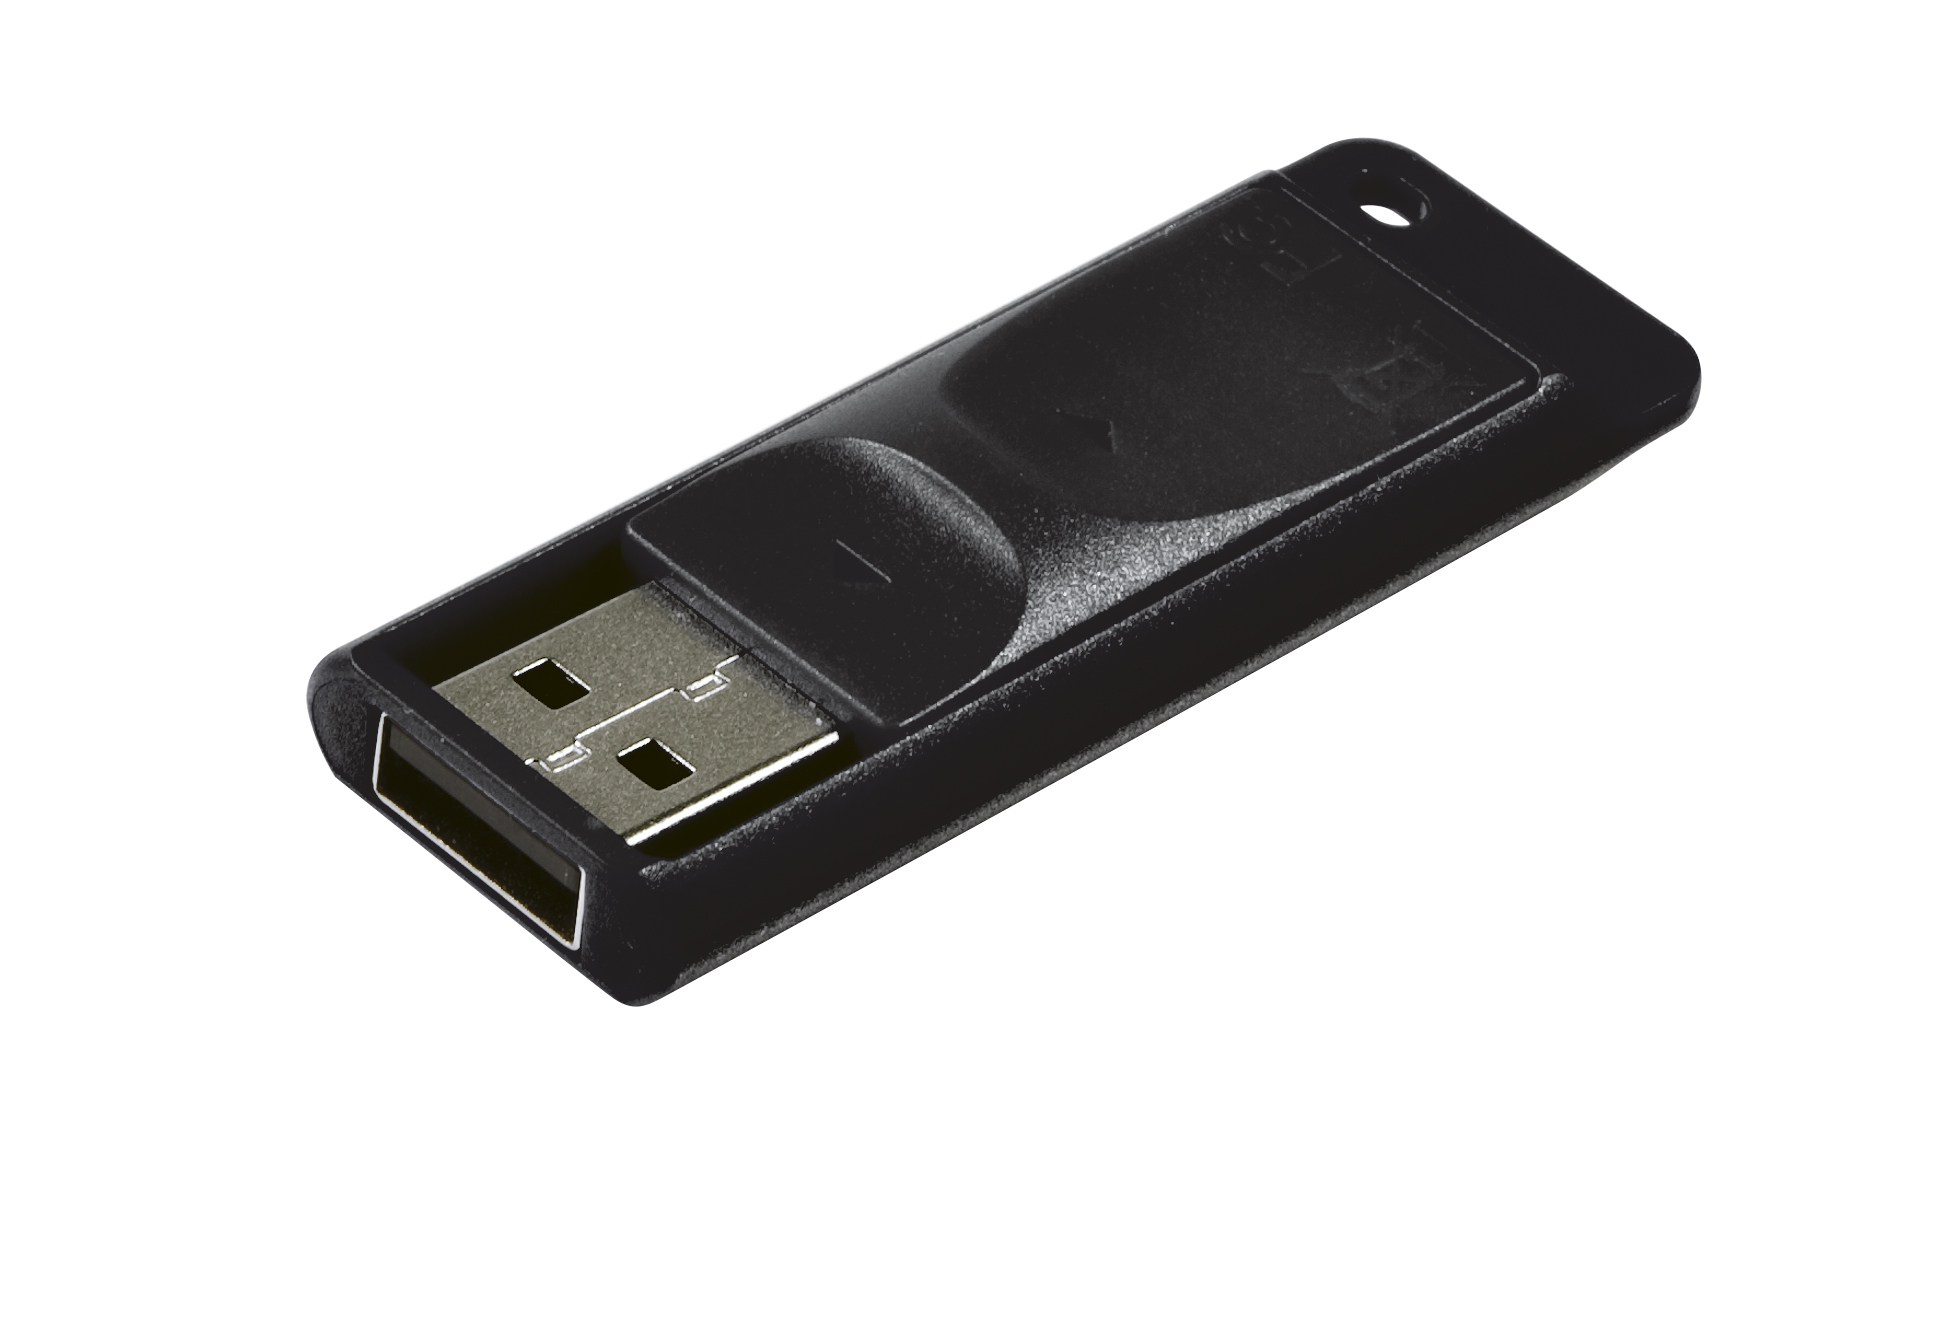 Verbatim Slider - USB Drive 64 GB - Black